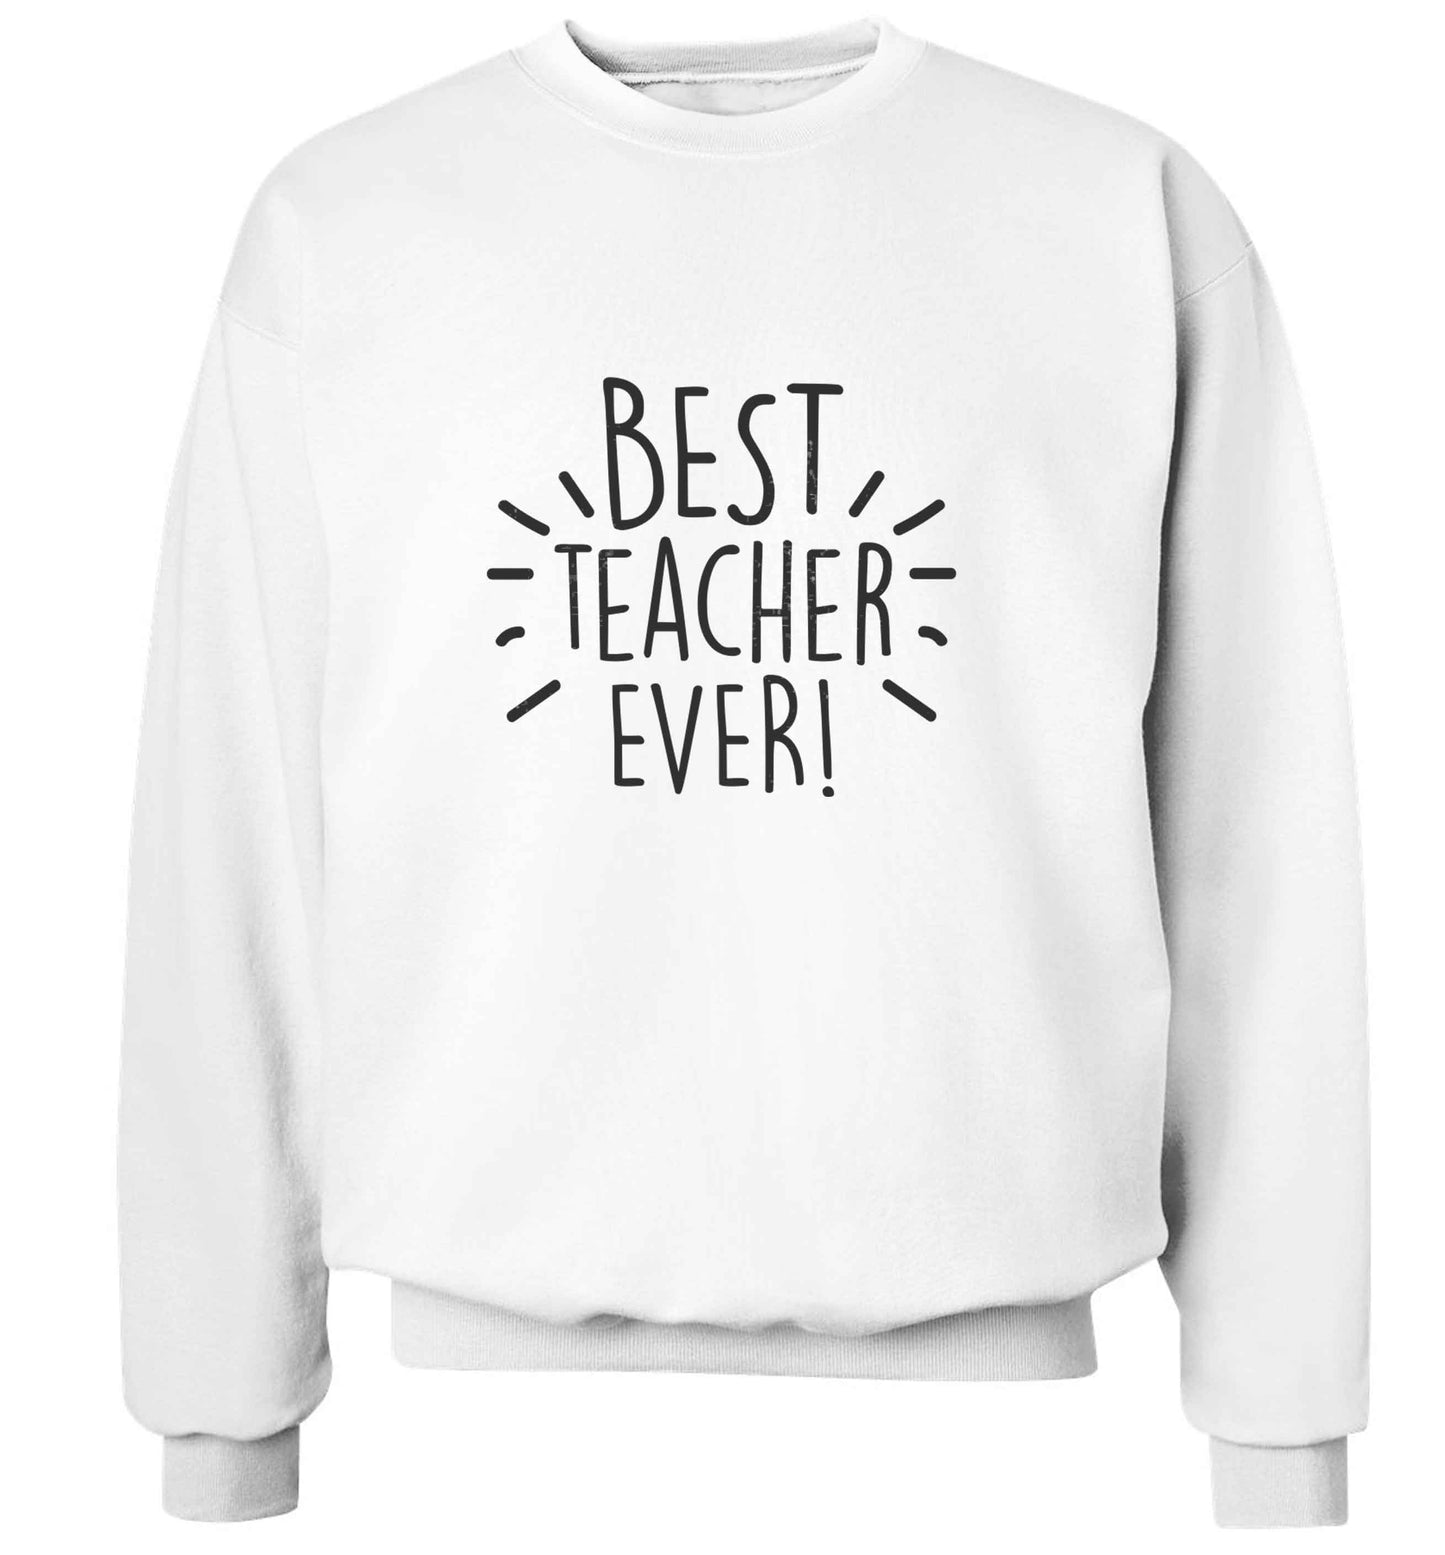 Best teacher ever! adult's unisex white sweater 2XL